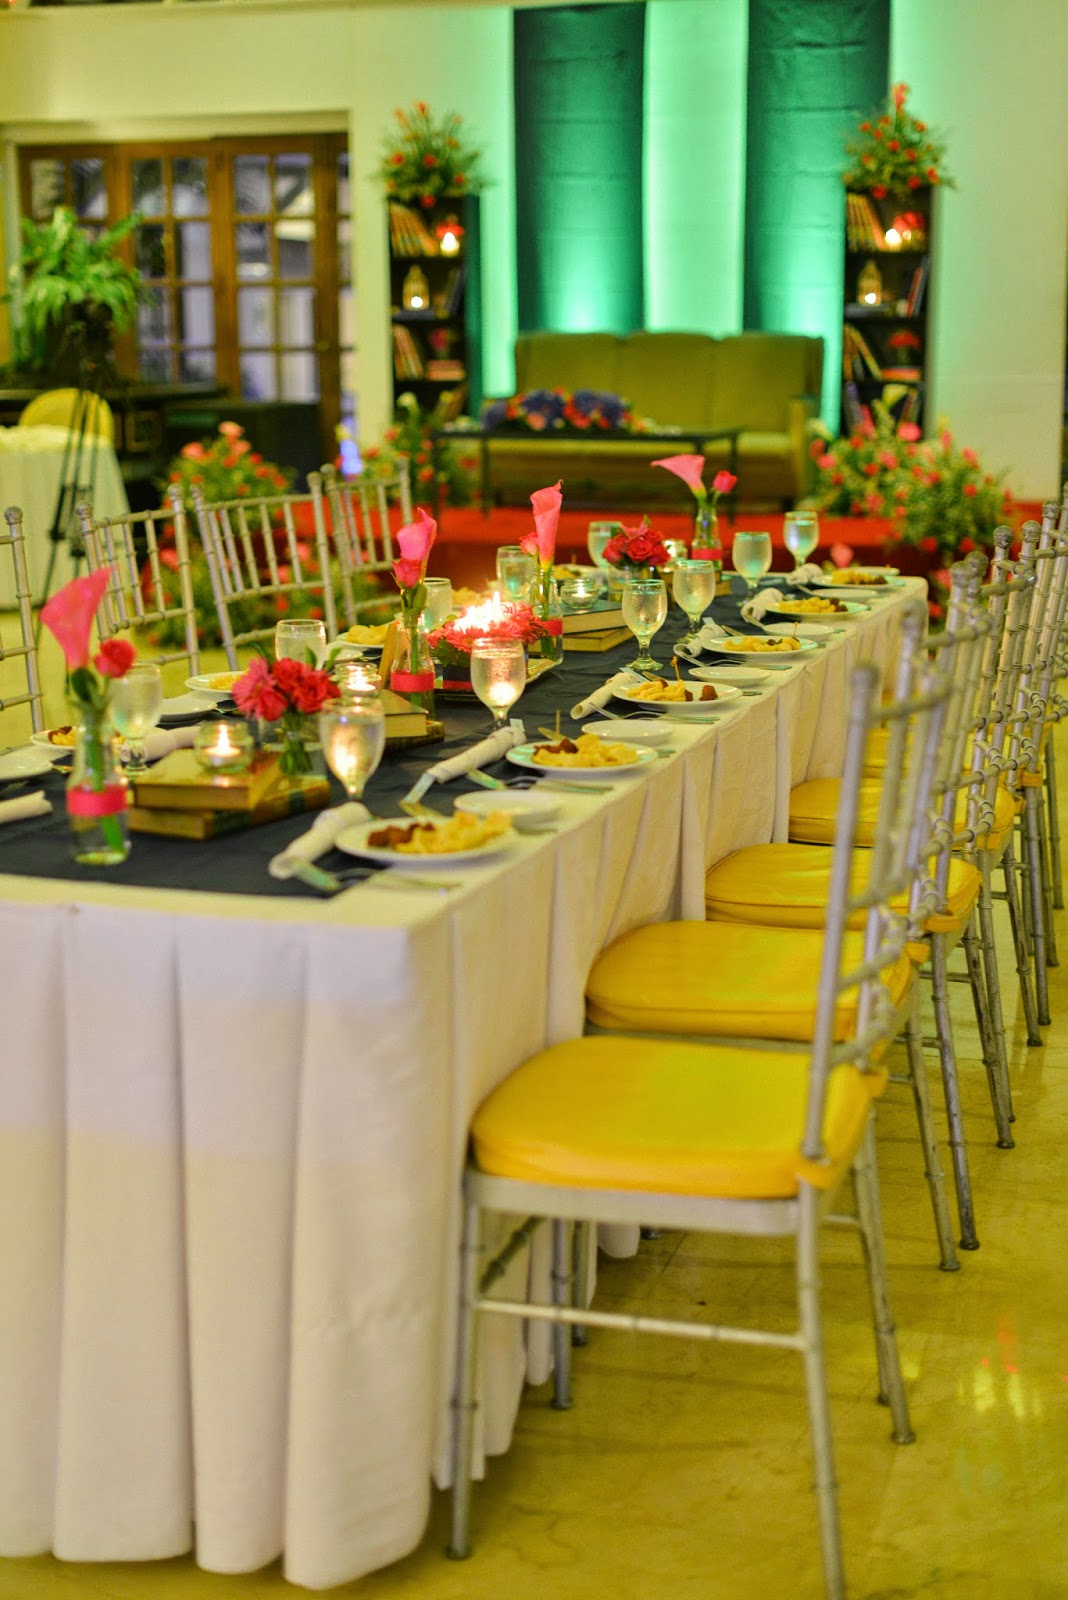 wedding reception table